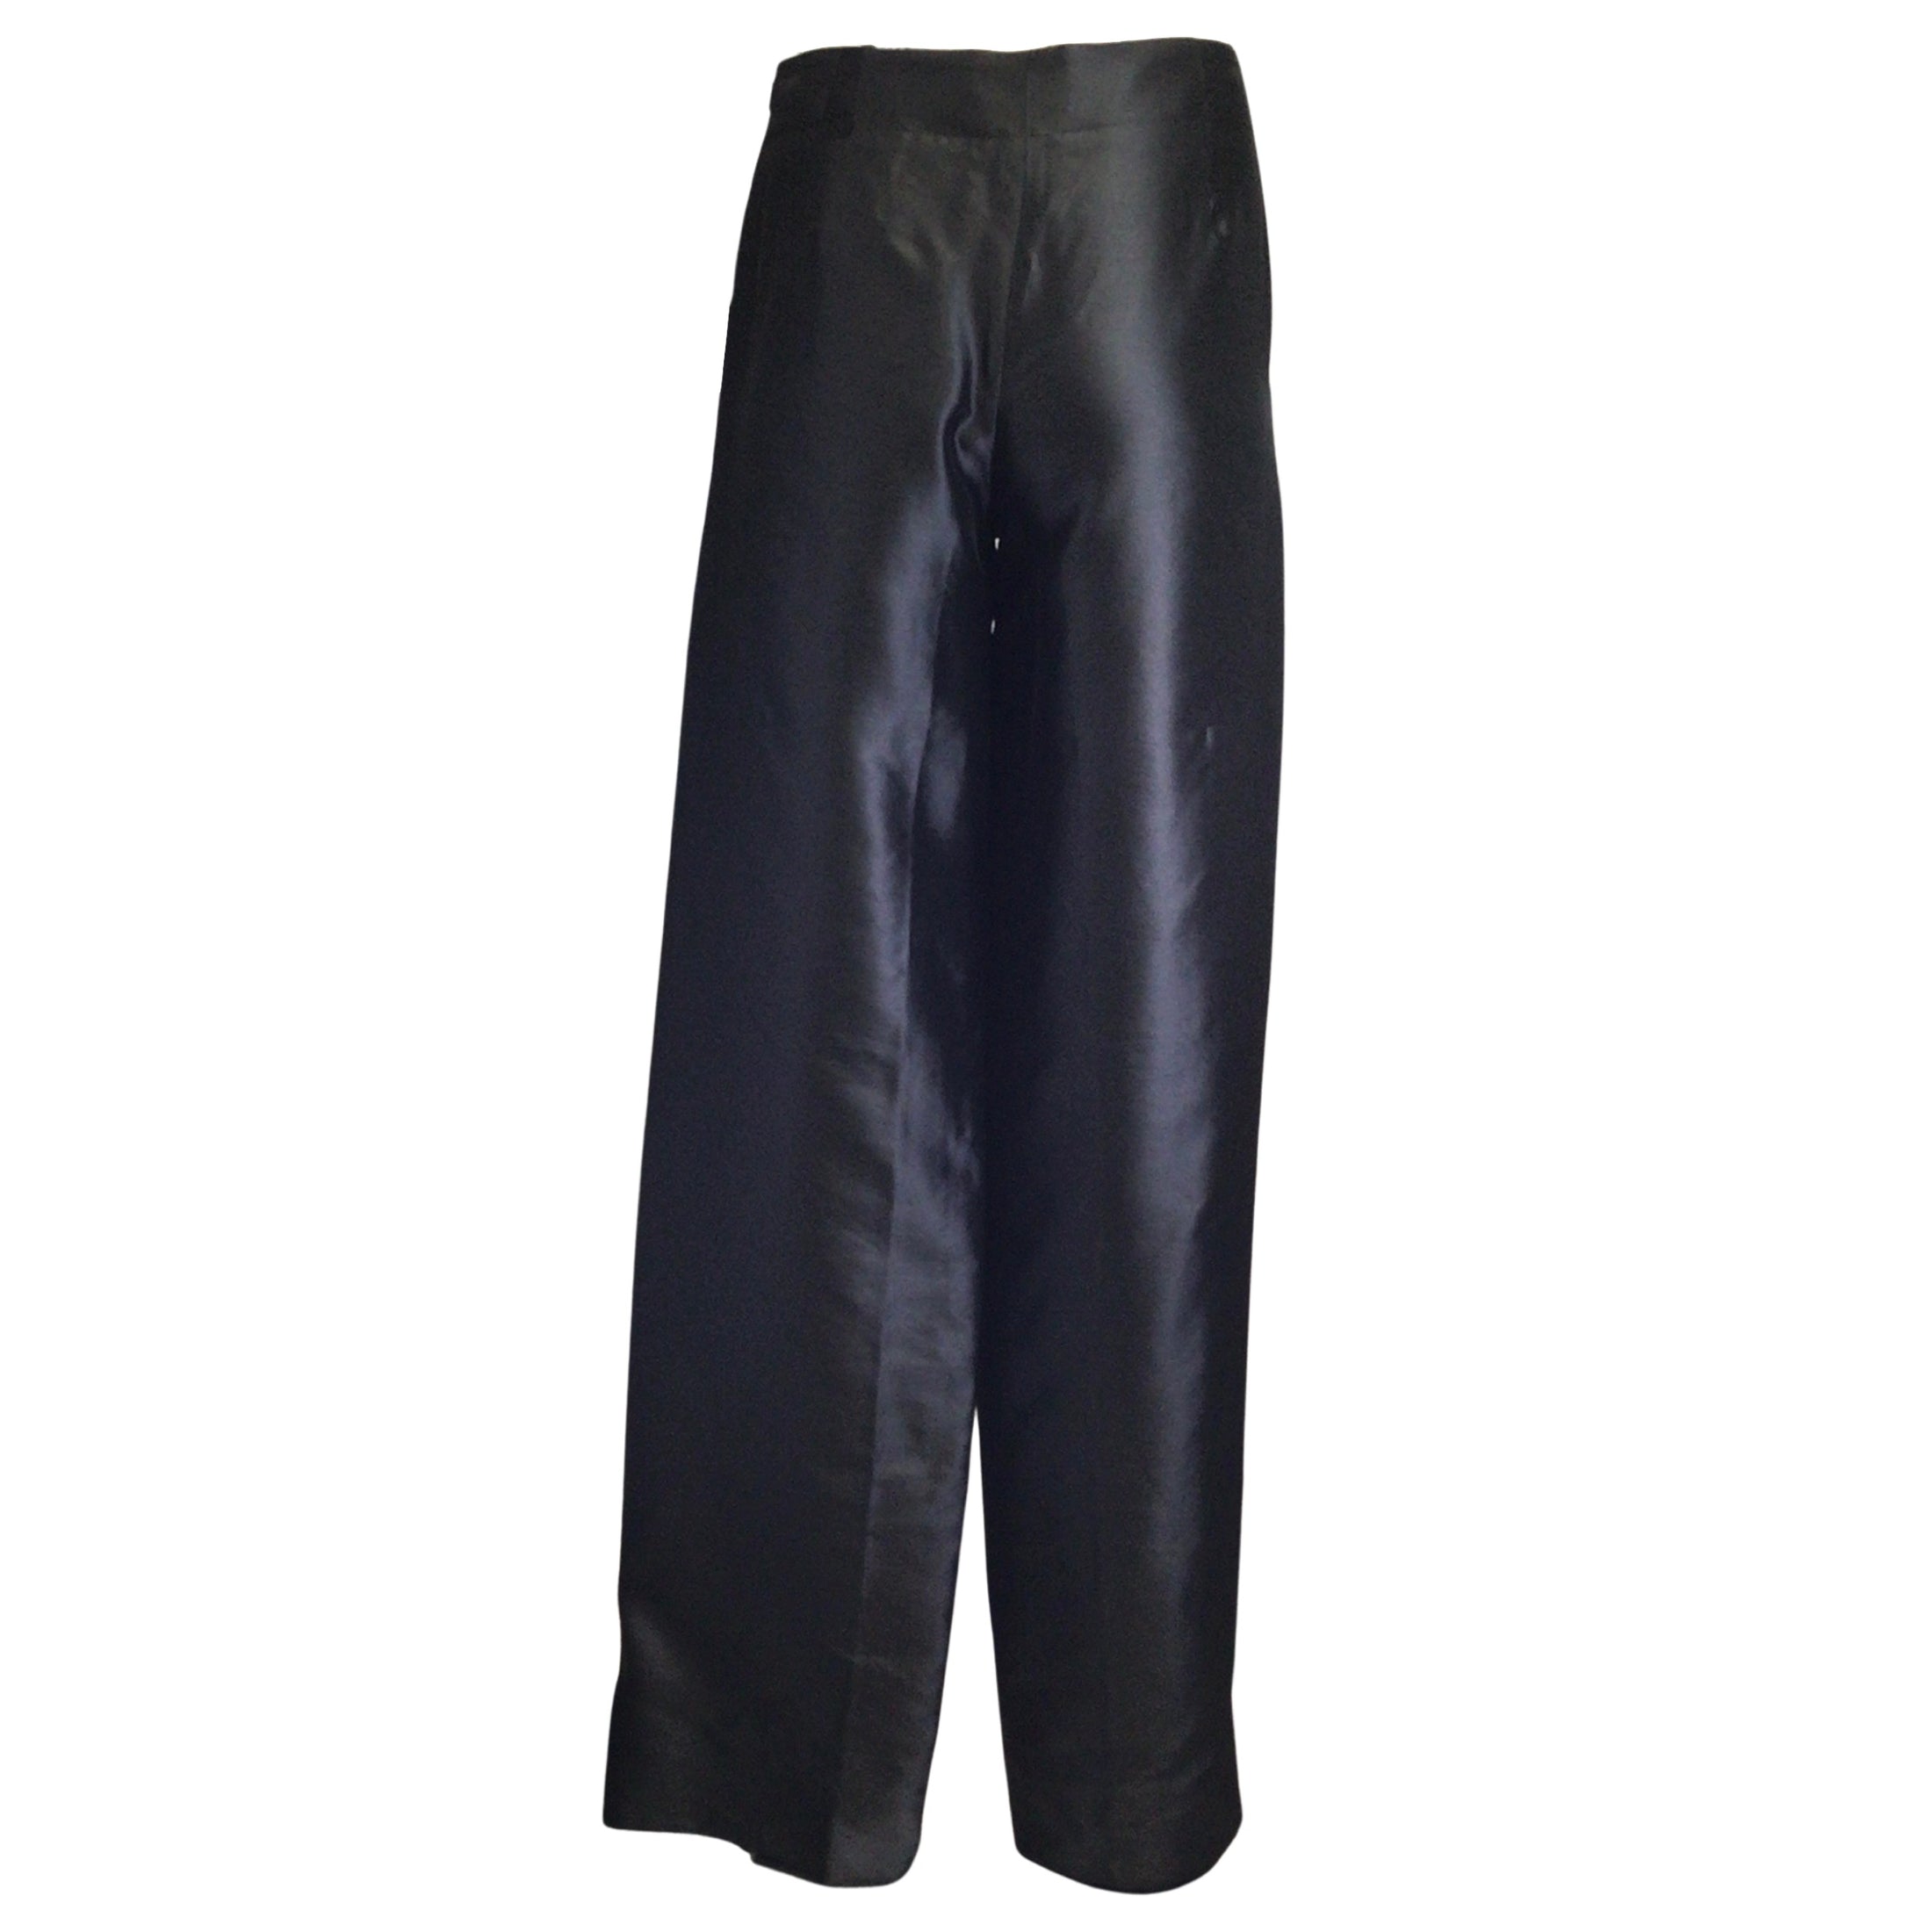 Giorgio Armani Black Silk Trousers / Pants